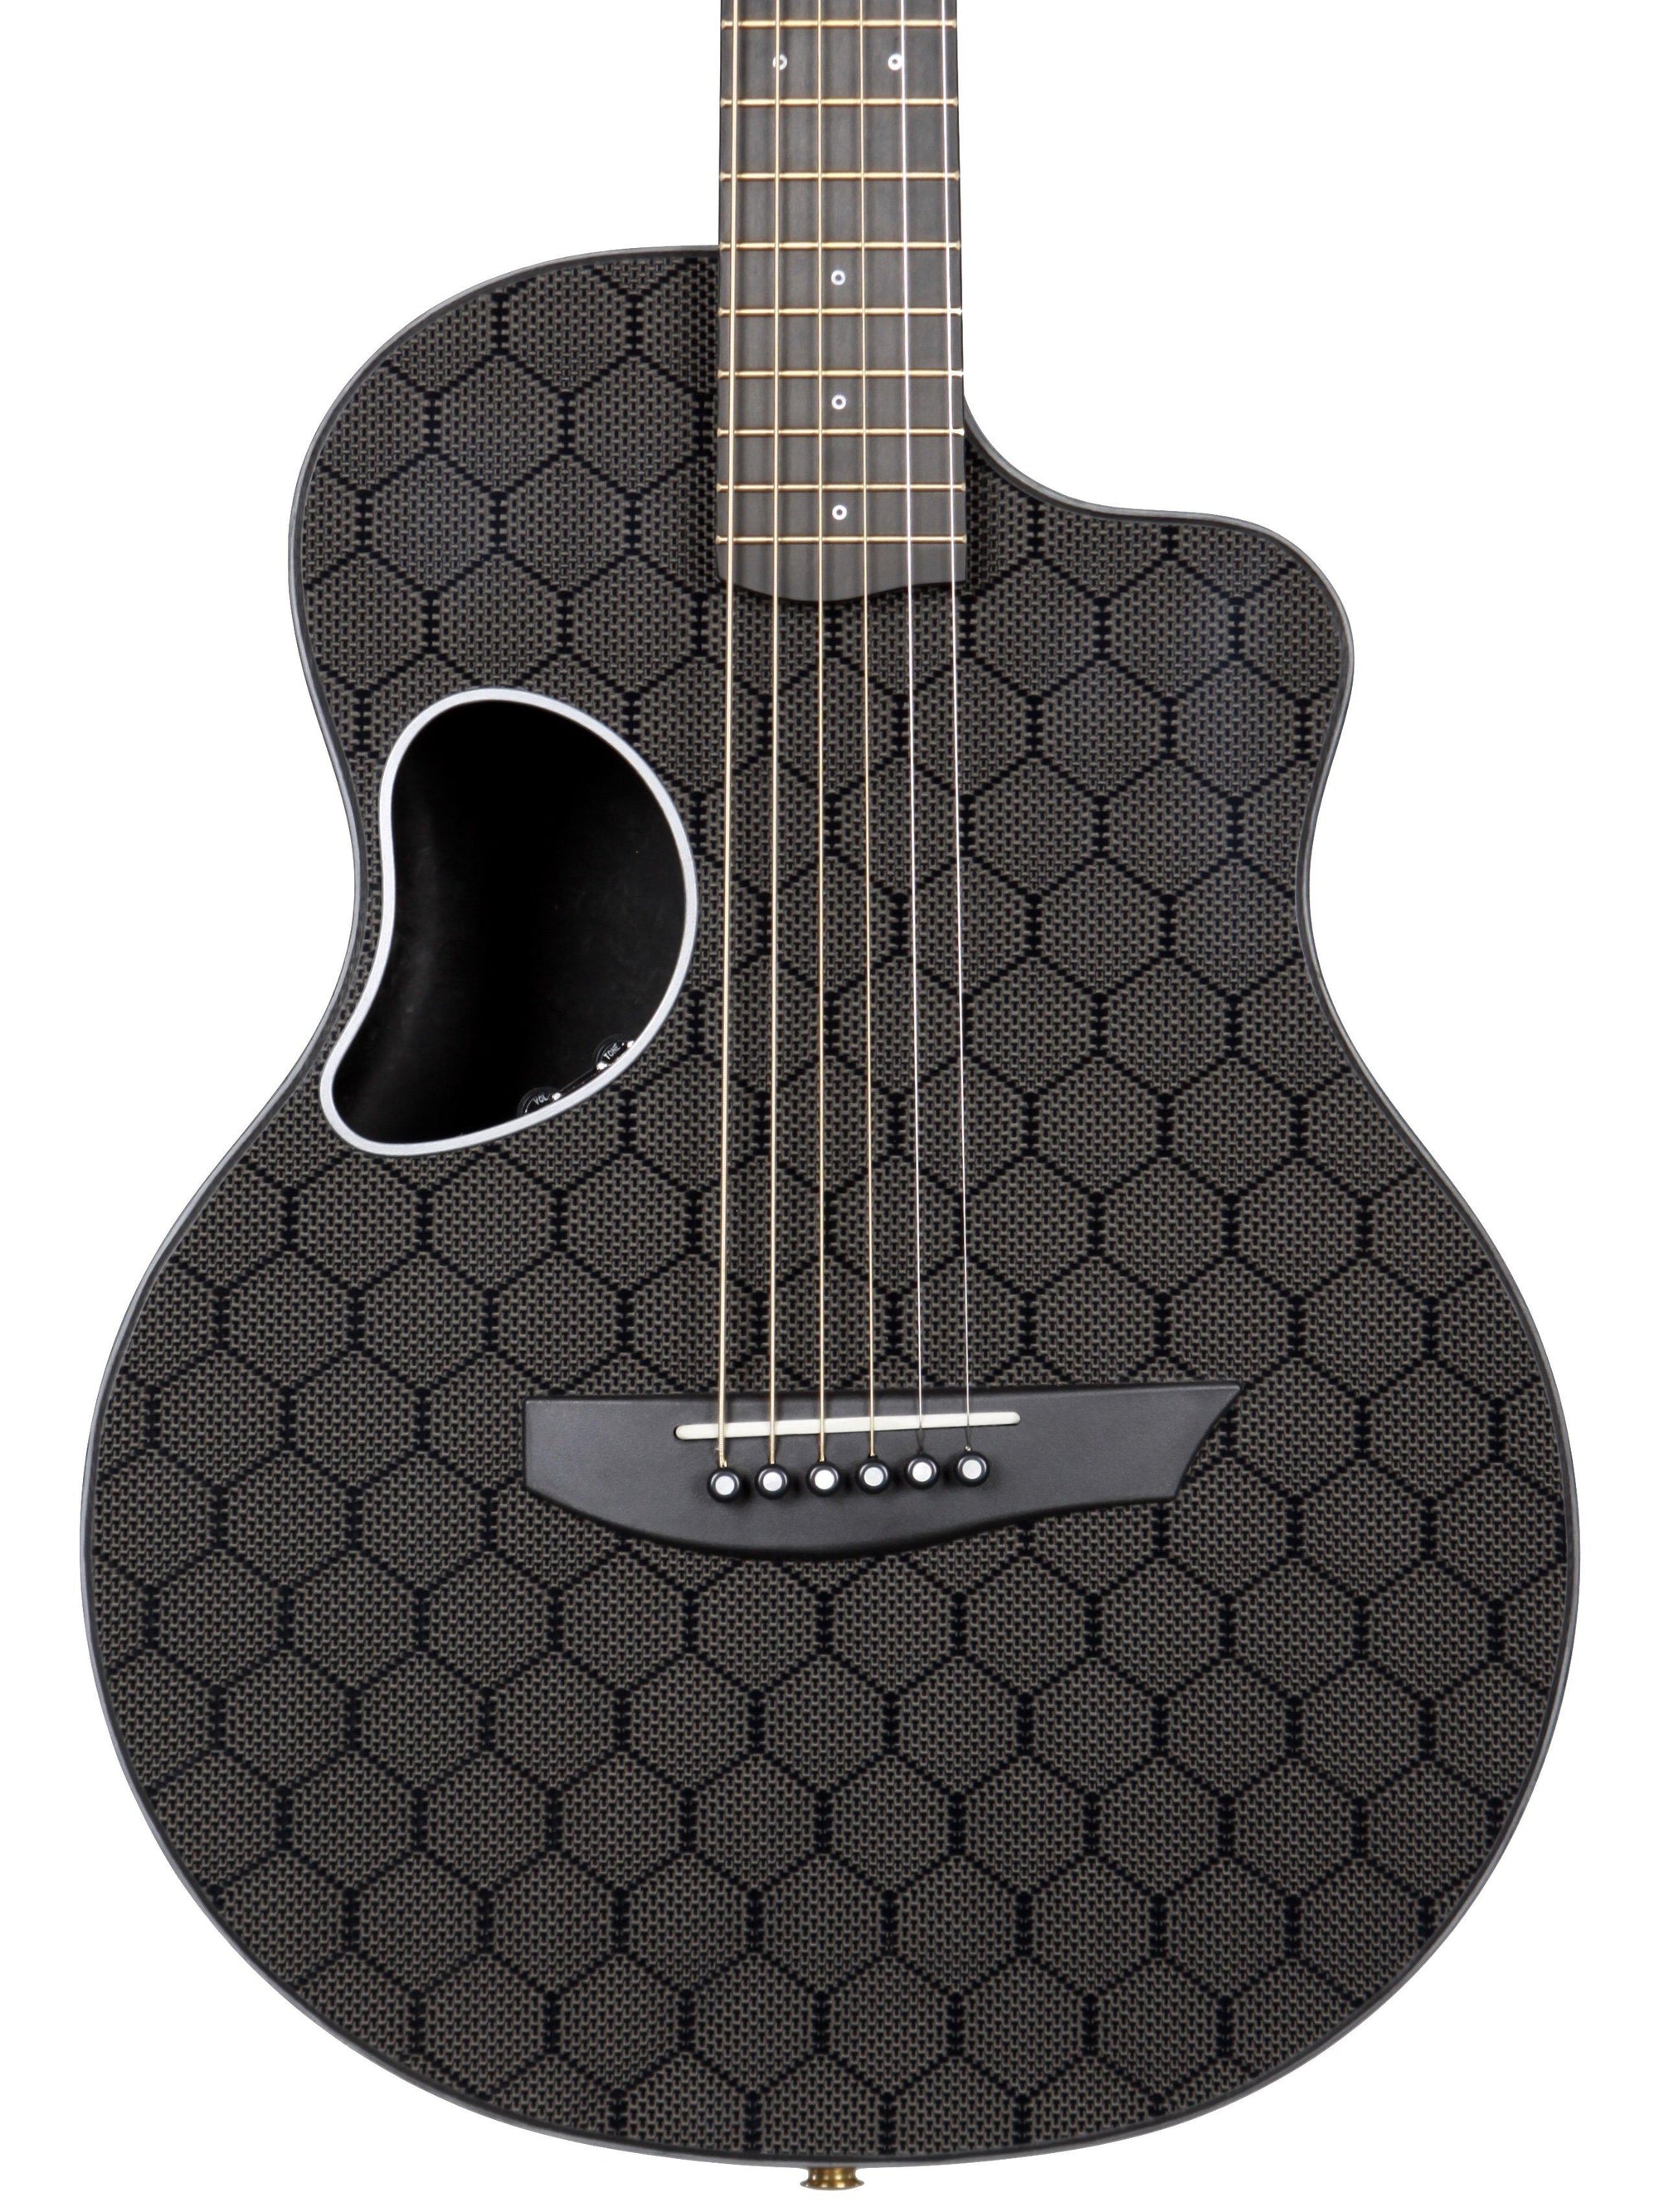 McPherson Carbon Fiber Touring with Honeycomb Finish Gold Hardware - McPherson Guitars - Heartbreaker Guitars